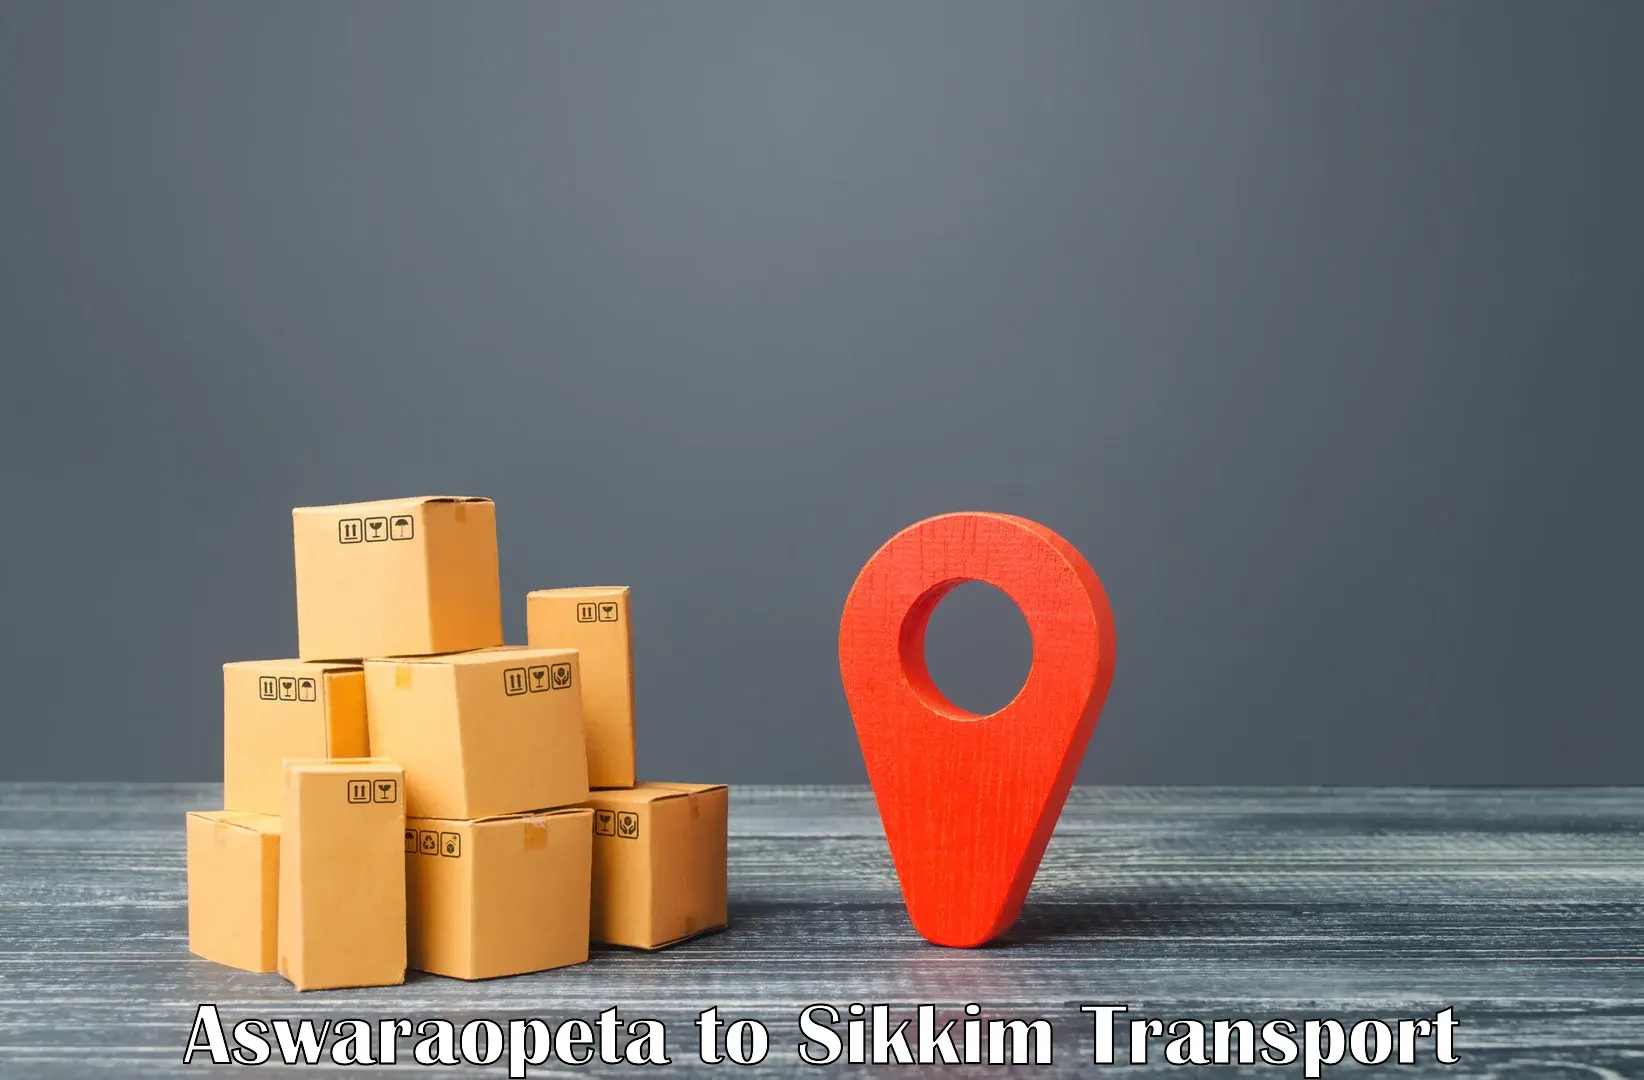 Shipping partner Aswaraopeta to West Sikkim